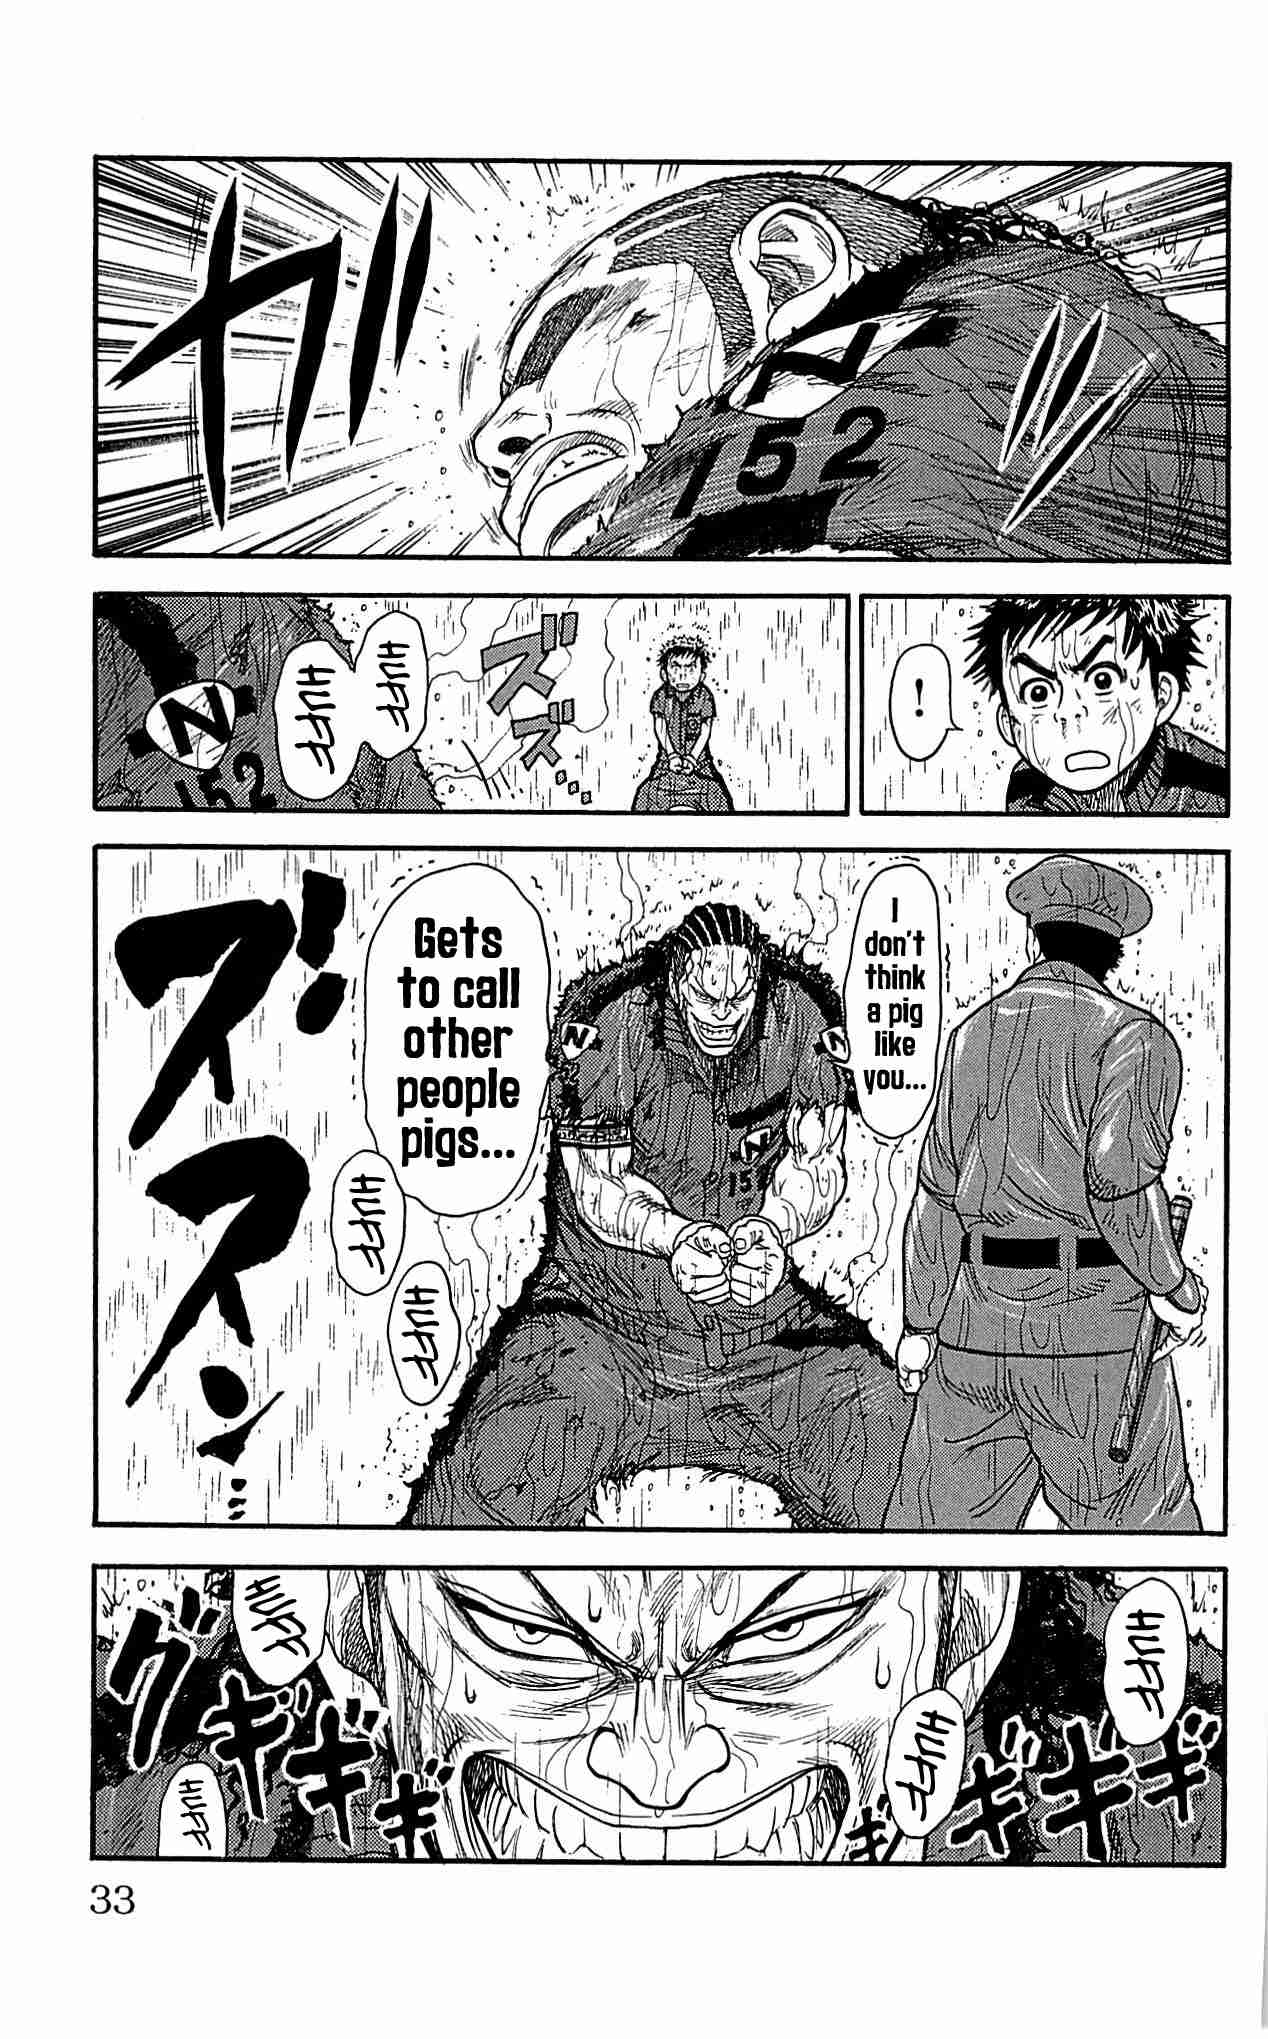 Prisoner Riku Vol. 2 Ch. 9 Oppression